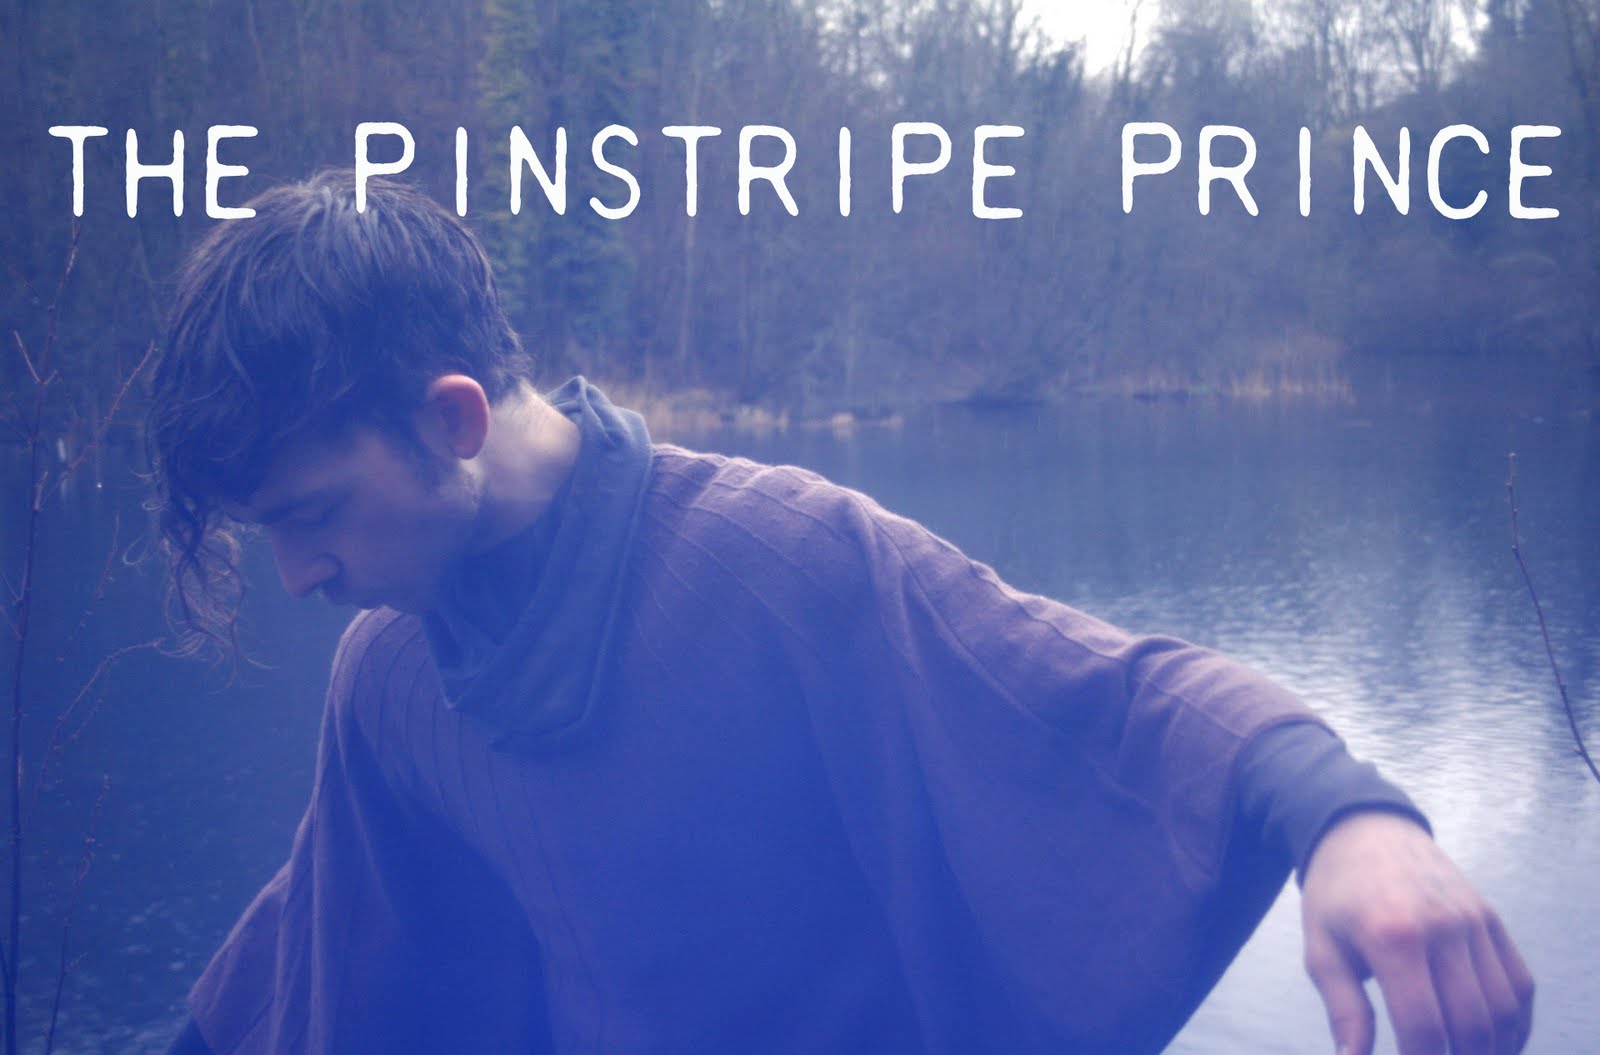 The Pin Stripe Prince